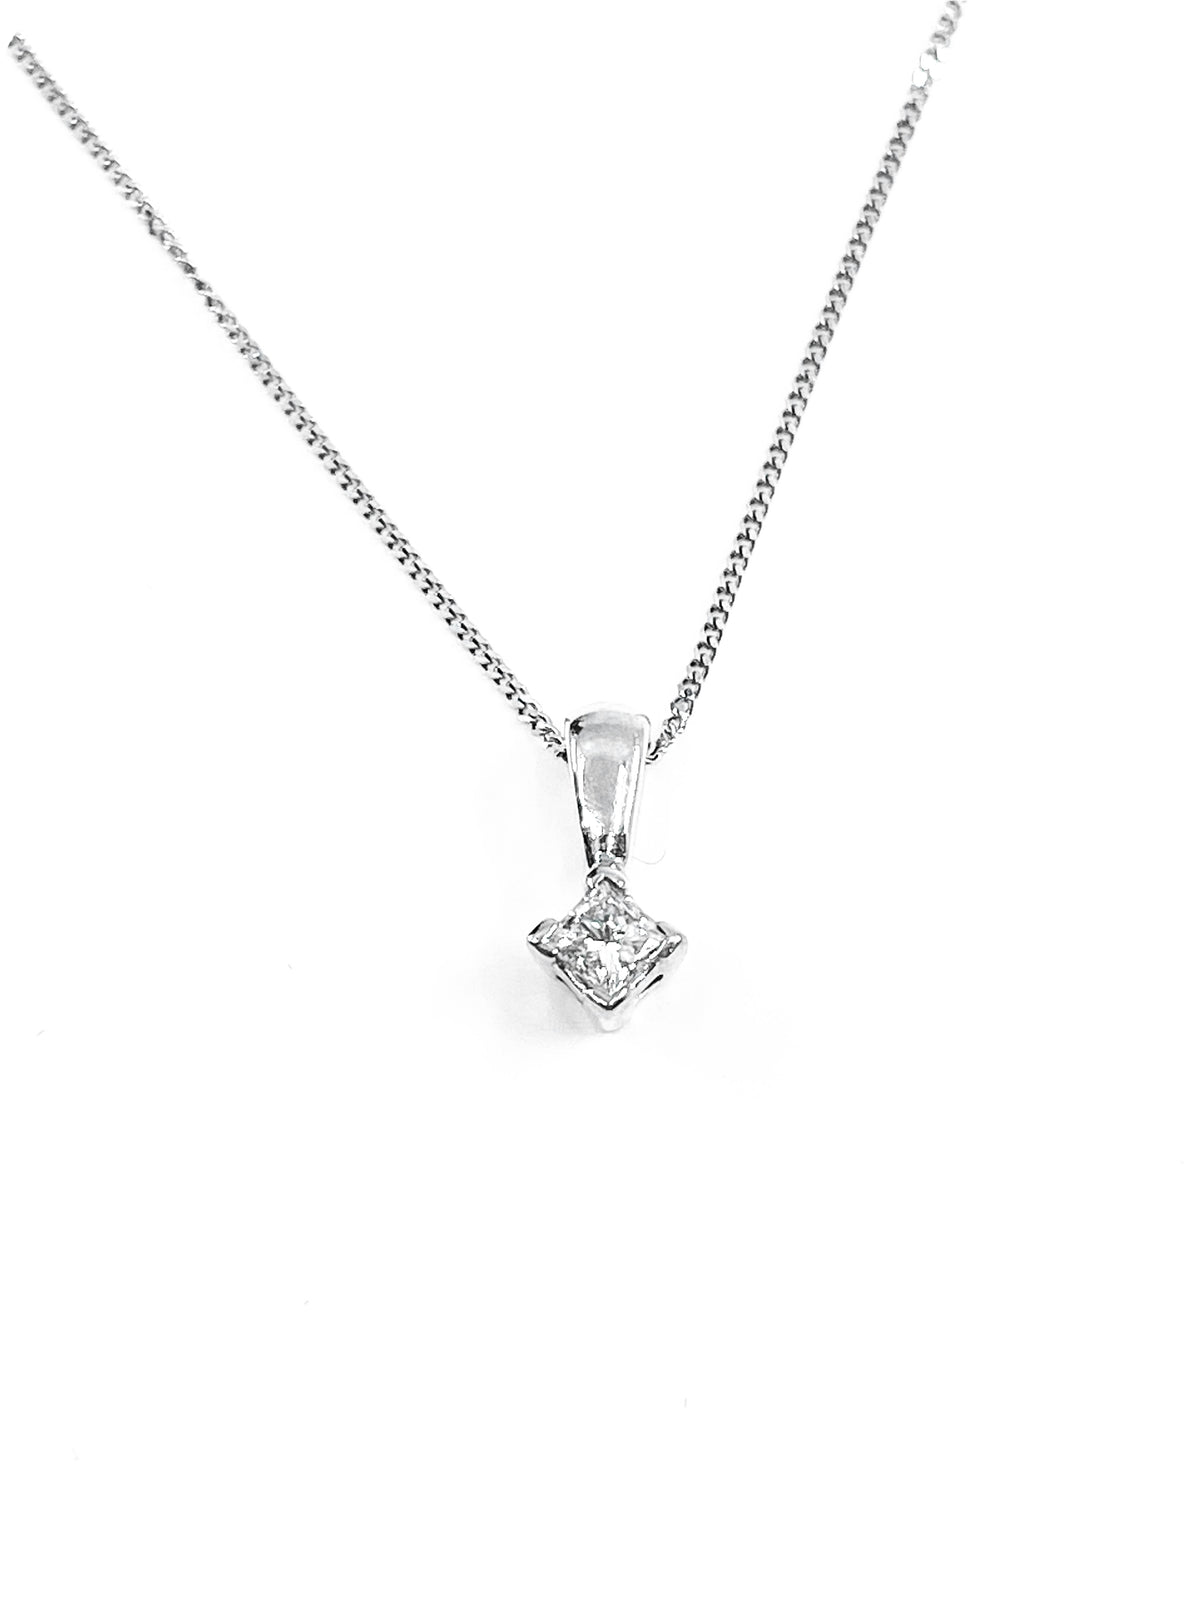 14K White Gold 0.30cttw Princess Cut Square Cut Canadian Diamond Pendant, 18”